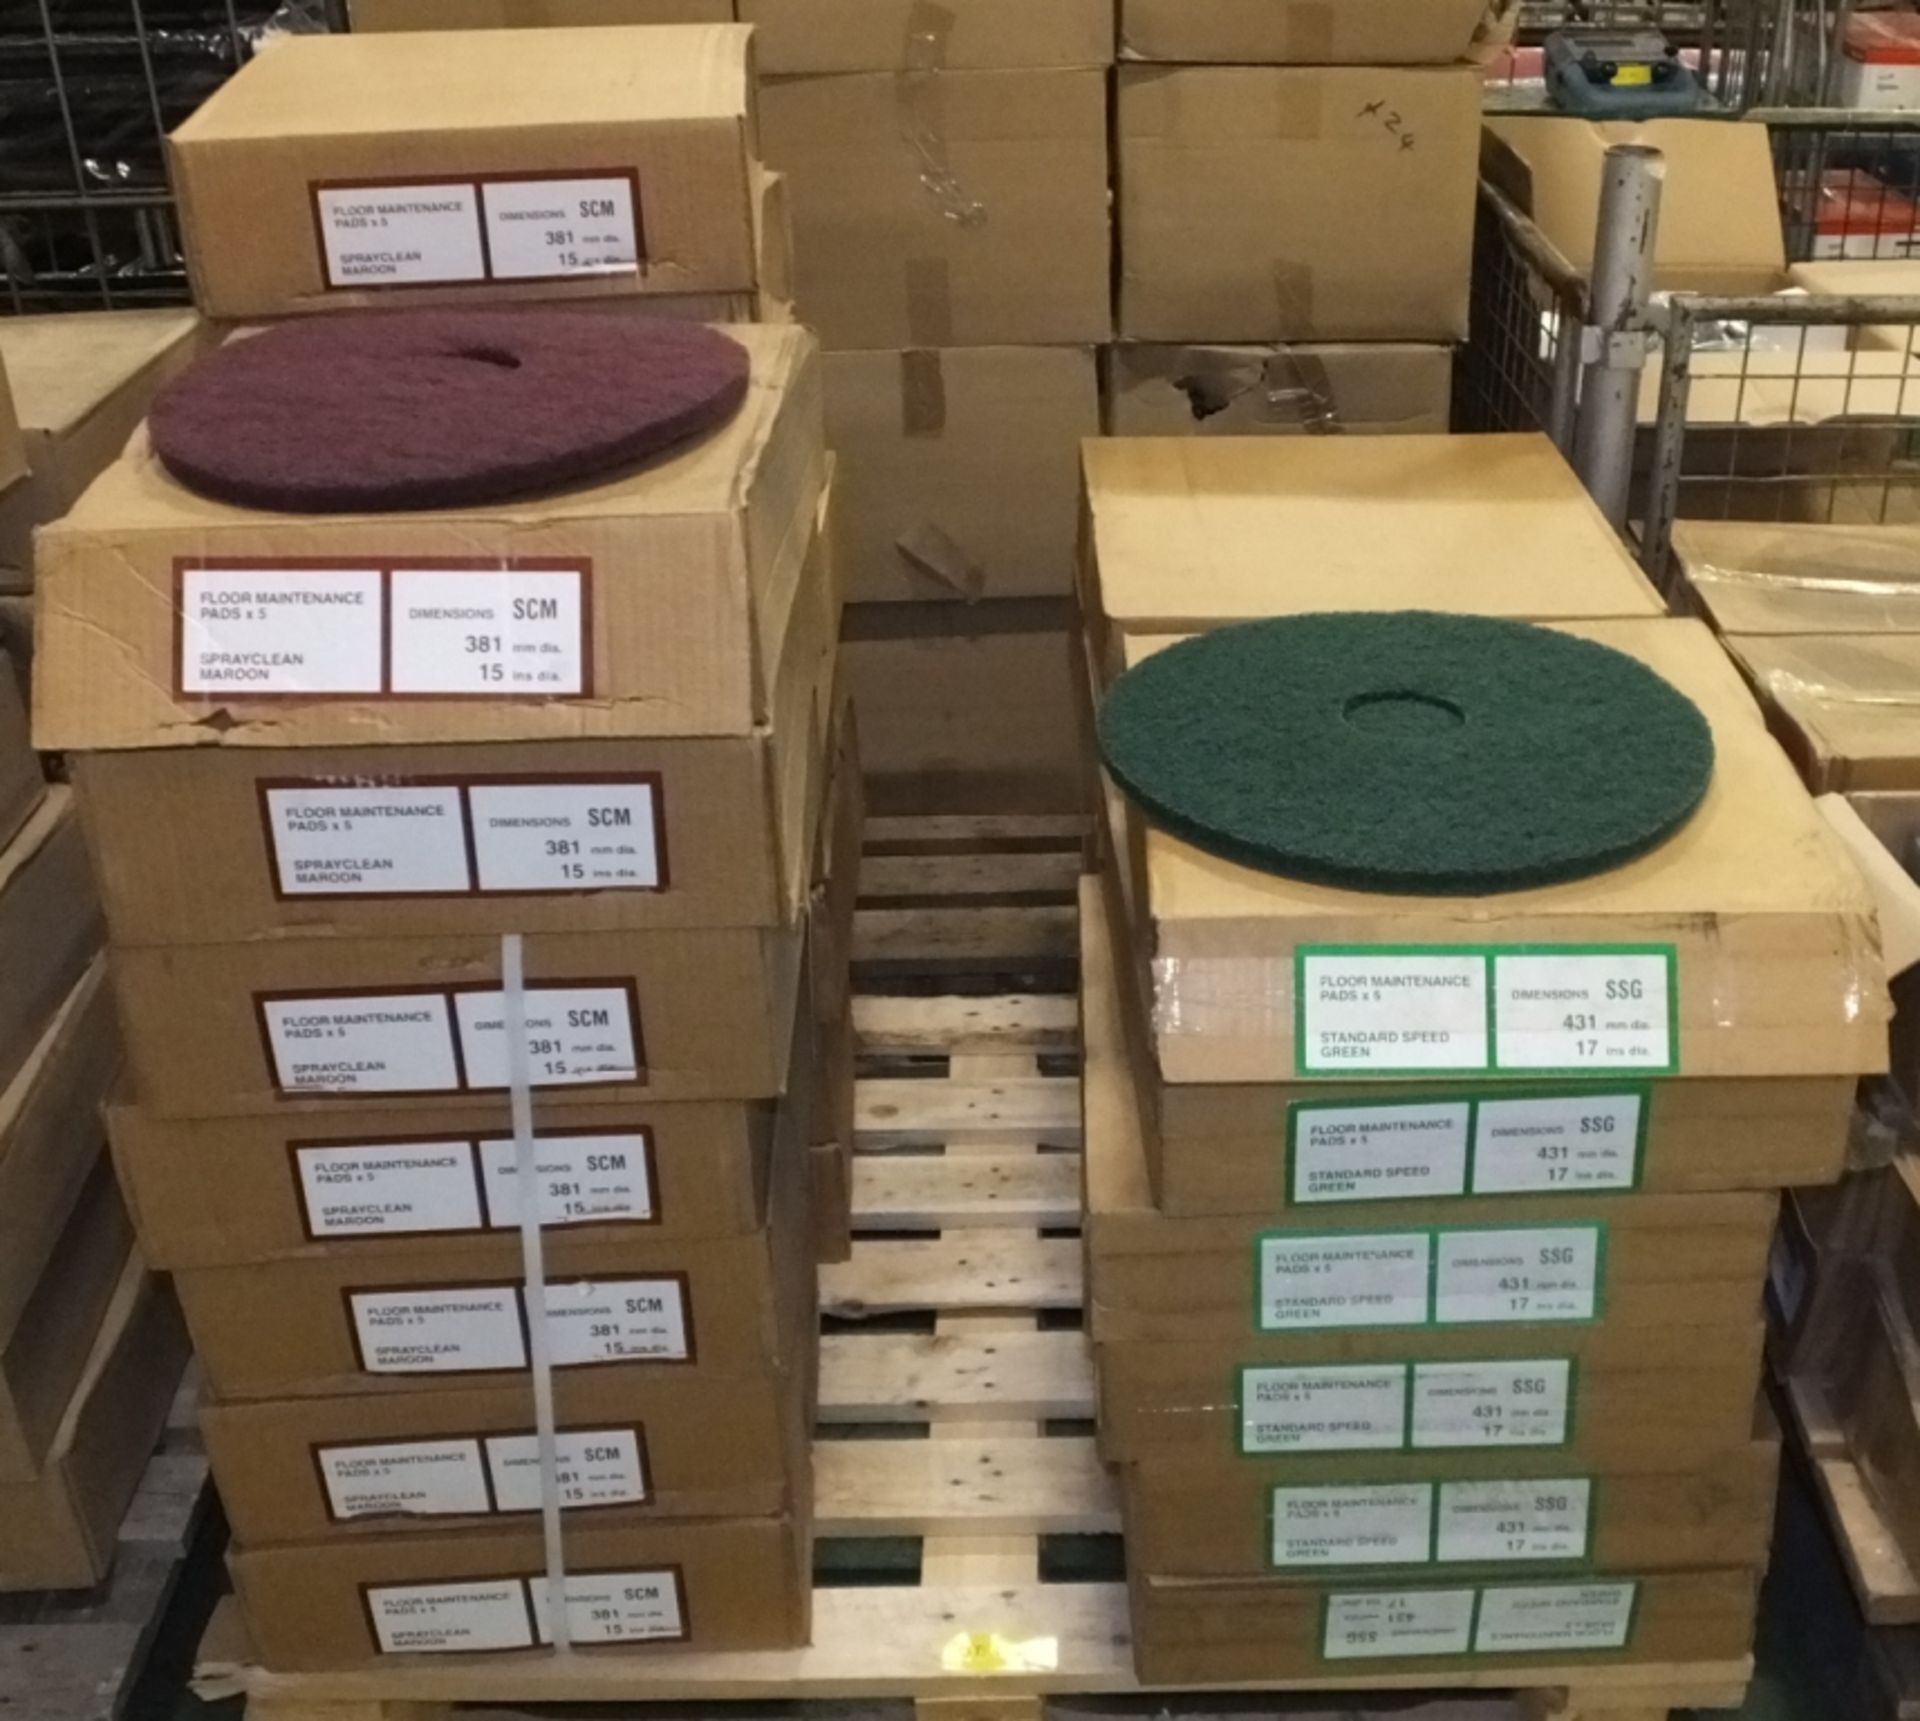 Floor Maintenance pads - Green - 5 per box - 12 boxes, Maroon - 5 per box - 15 boxes